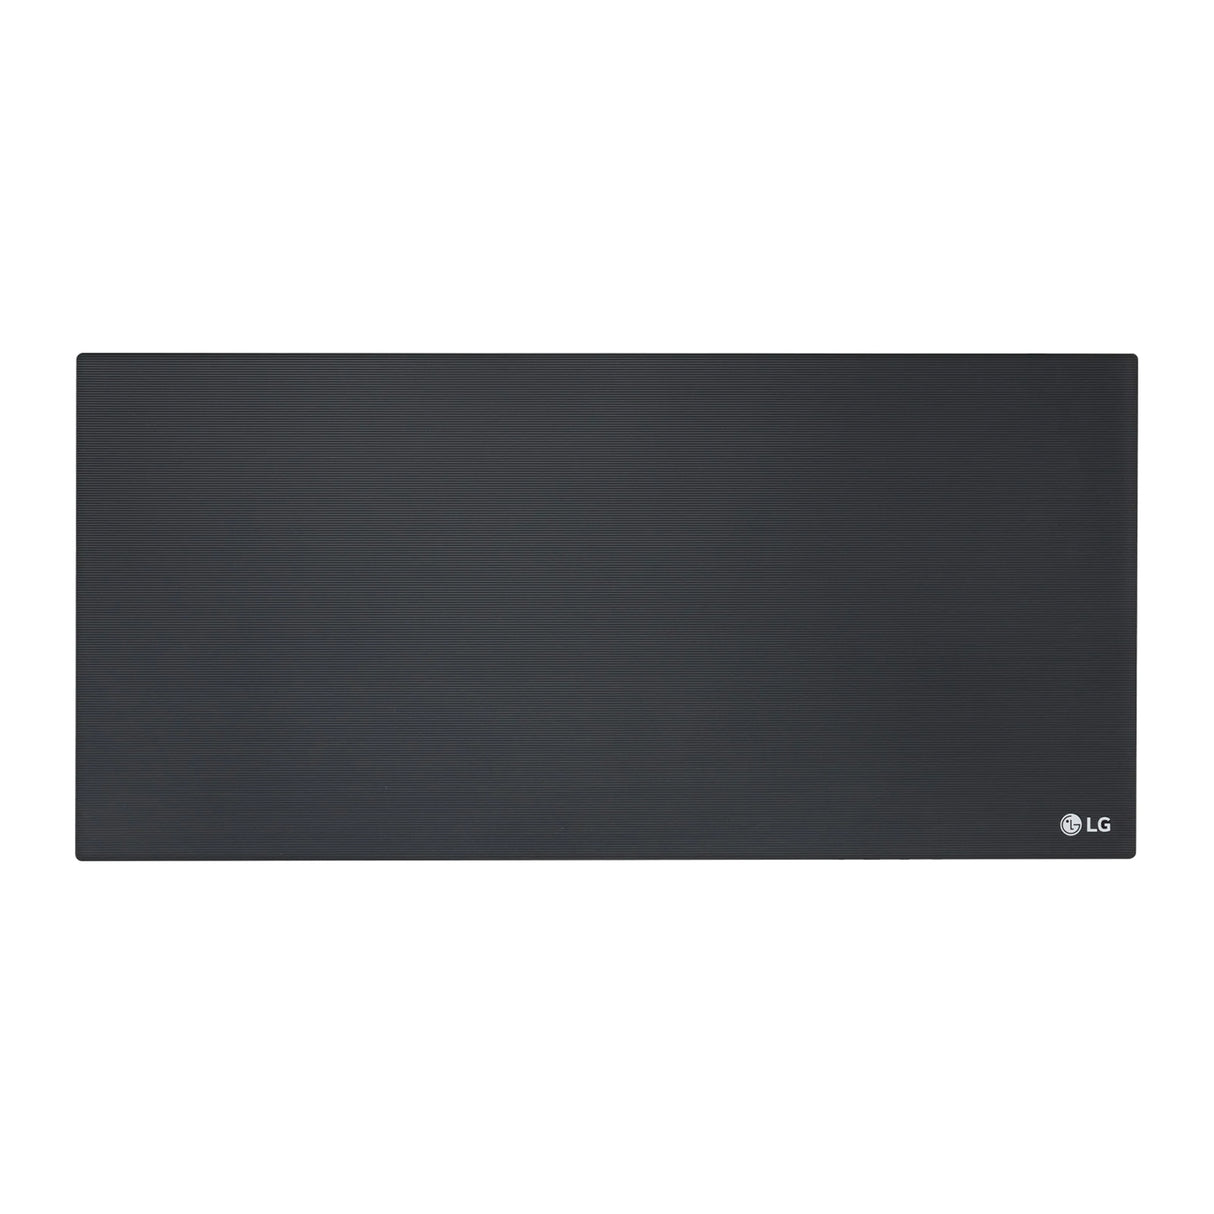 LG UBK90 - Multi Region 3D 4K Ultra HD Blu-Ray Disc Player